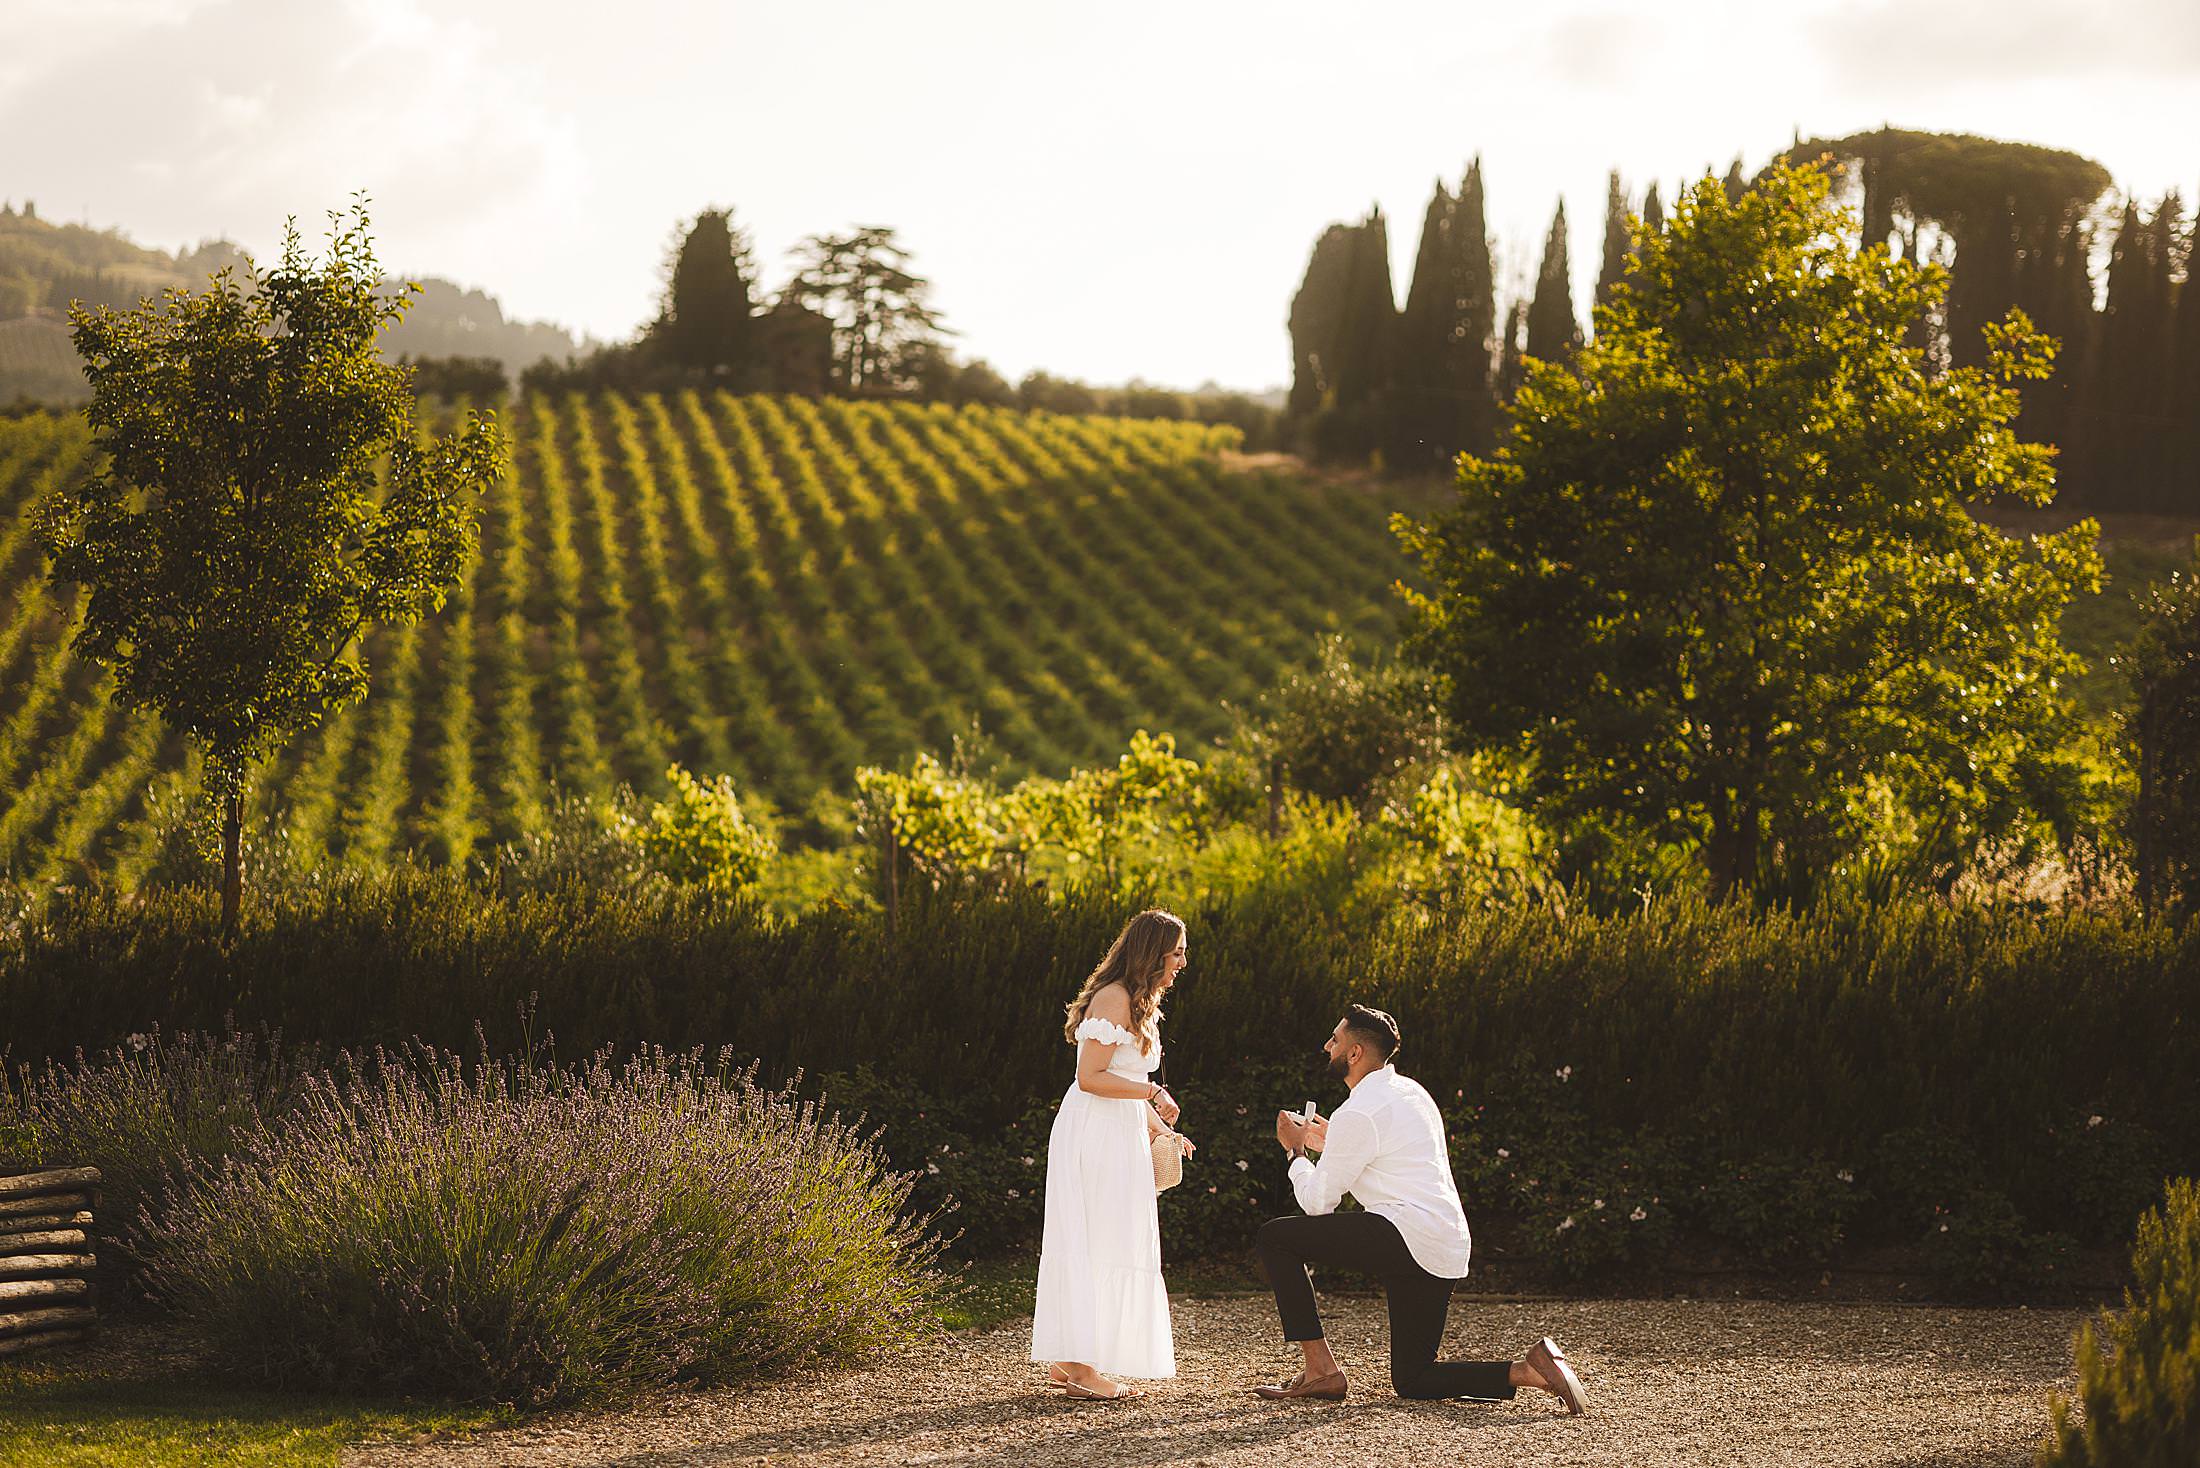 A joyful, secret wedding proposal in Chianti, Tuscany